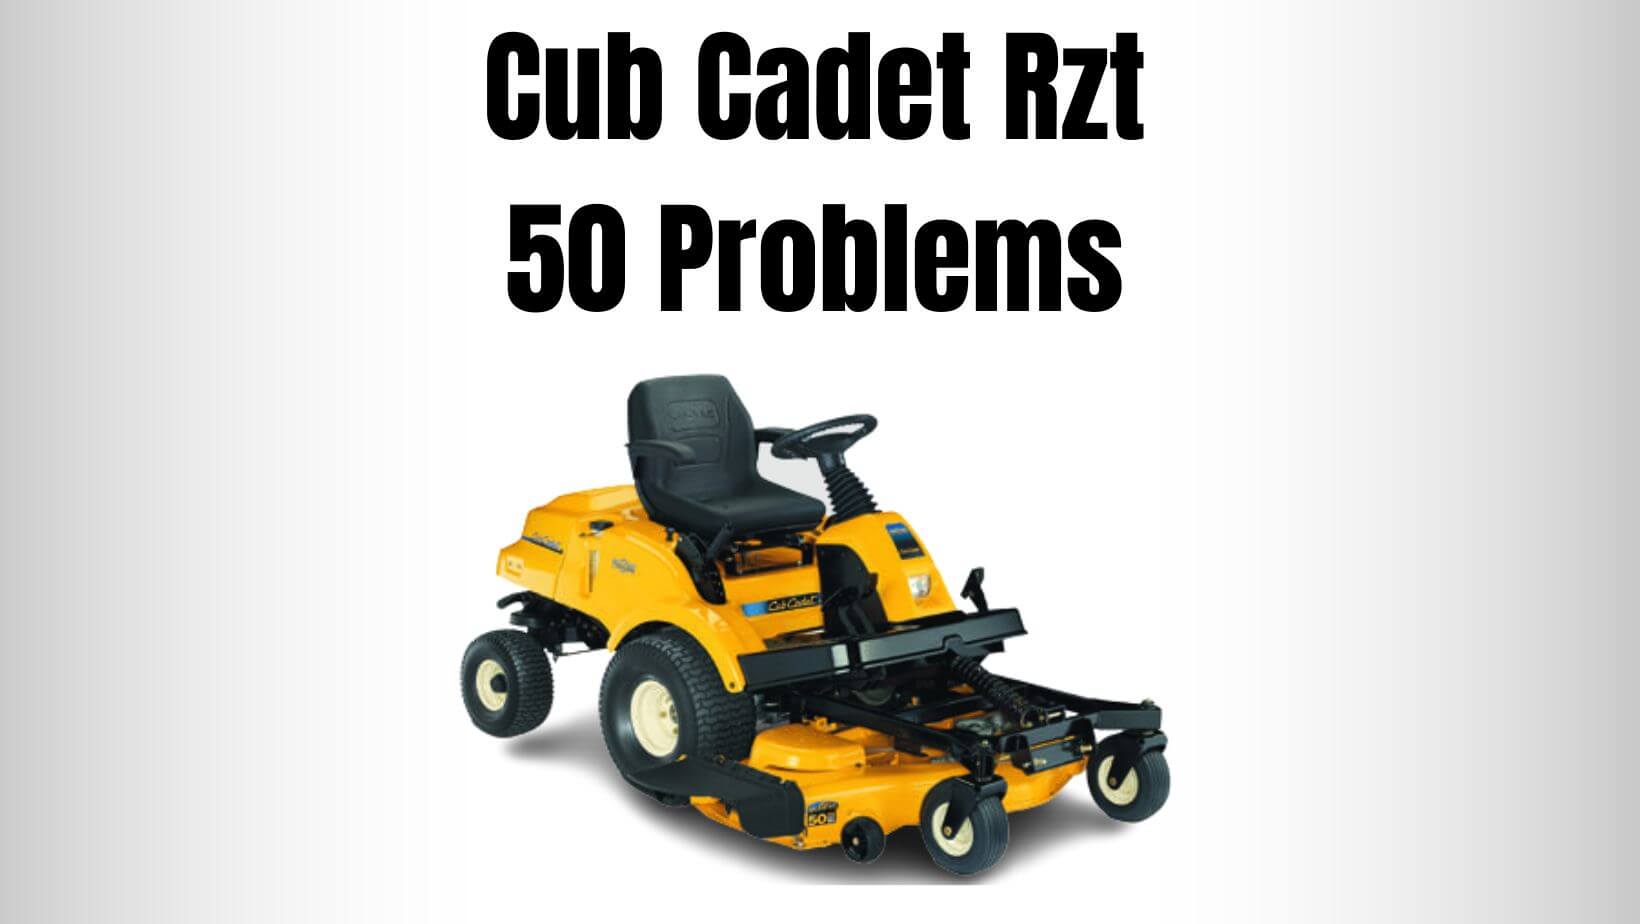 Cub Cadet Rzt 50 Problems